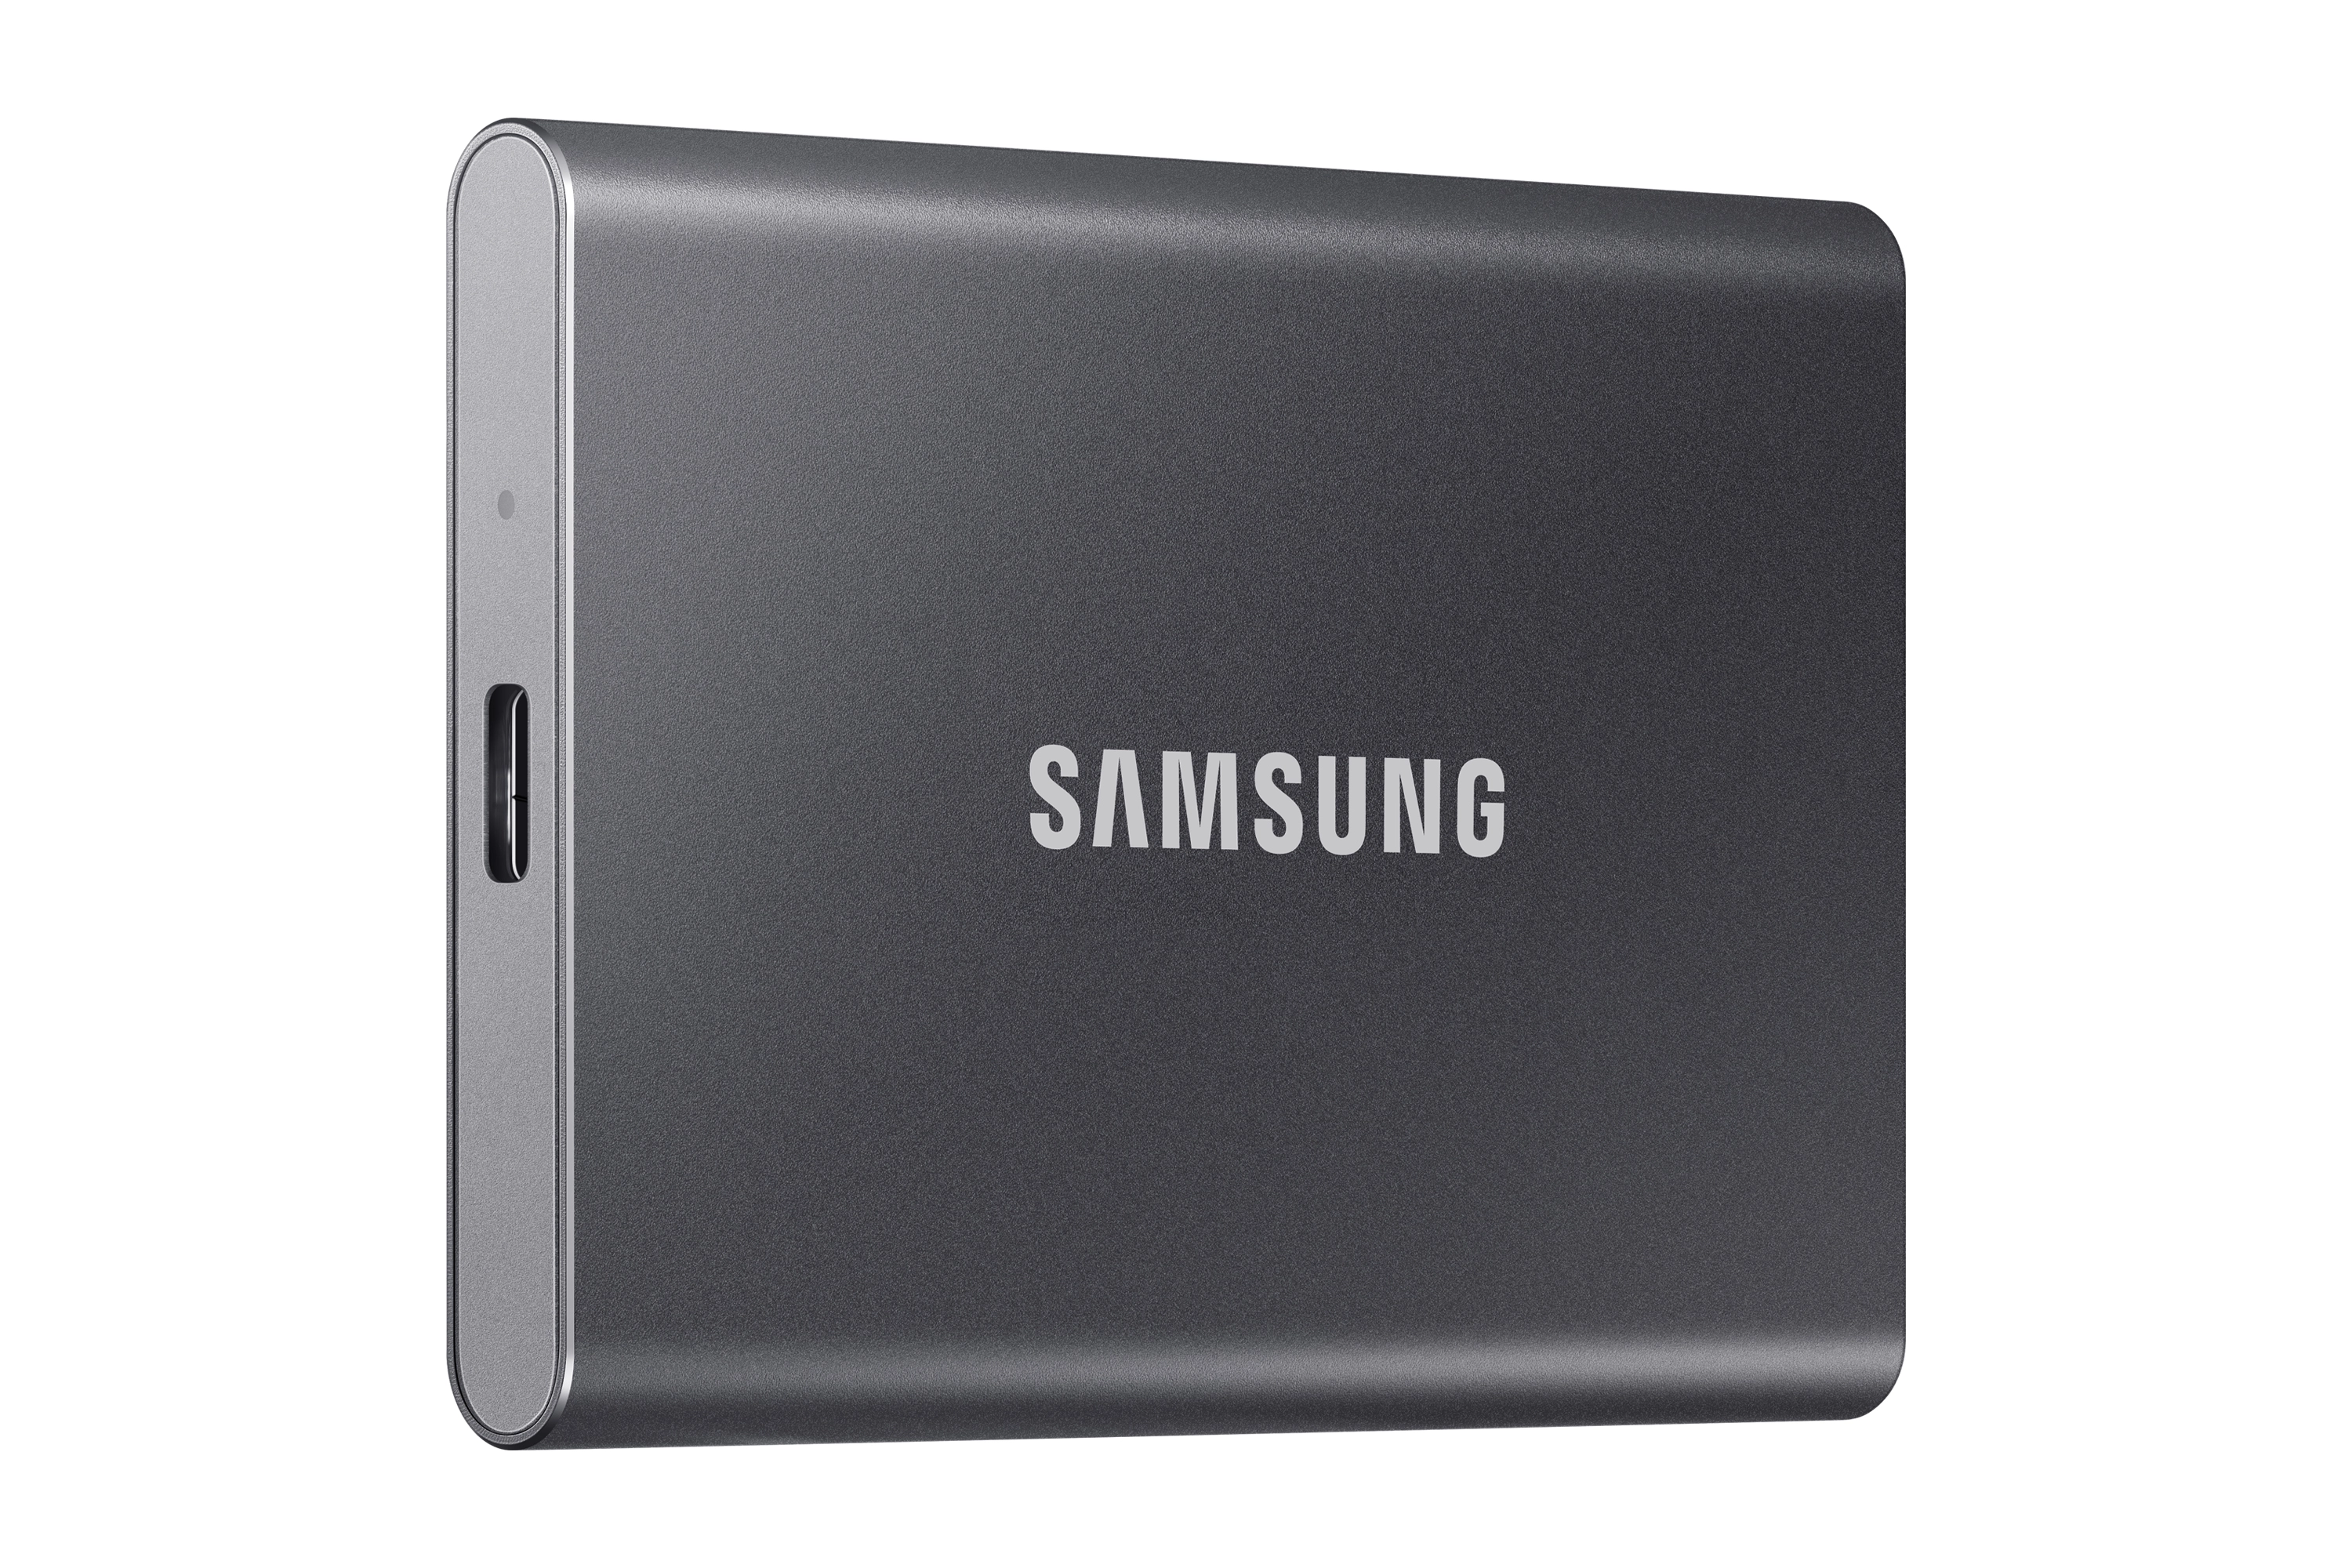 Samsung Portable SSD T7 - 2000GB SSD - extern